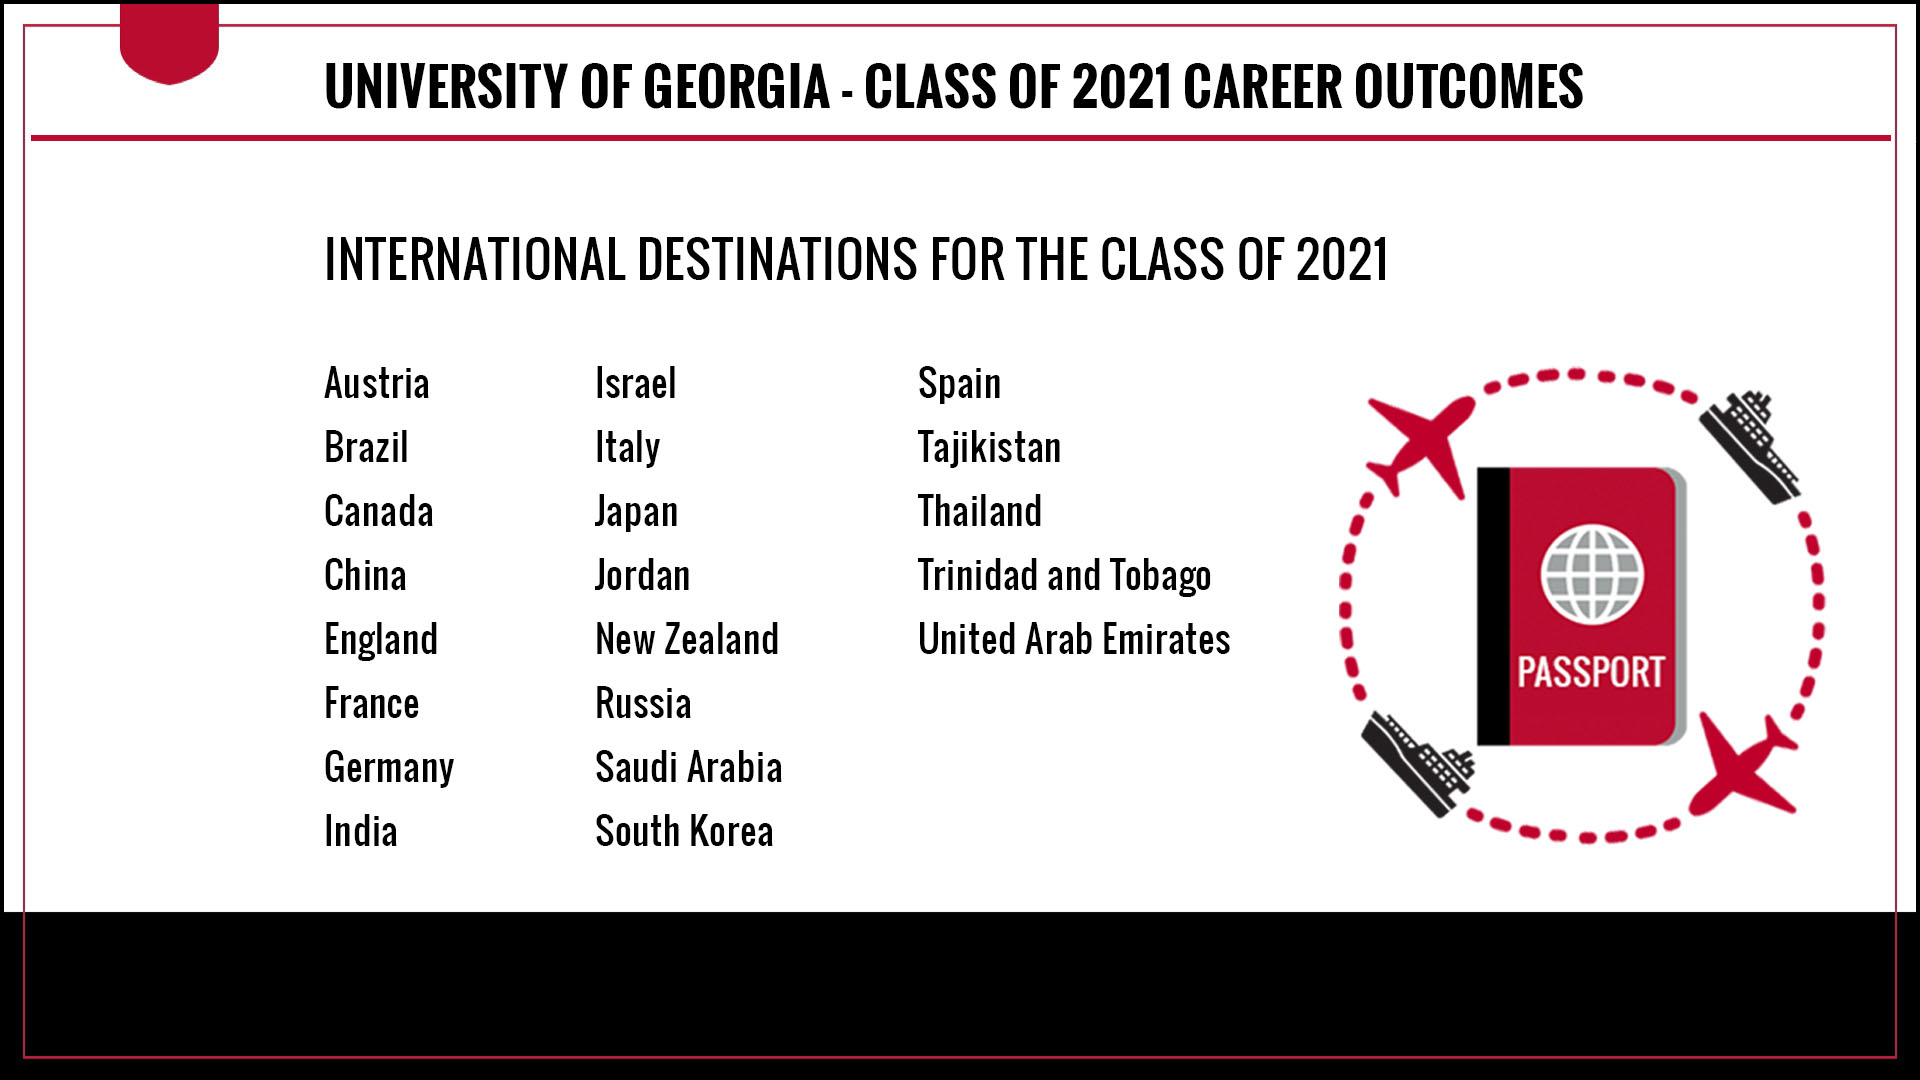 International destinations for UGA Class of 2021 graduates include Austria, Brazil, Canada, China, England, France, Germany, India, Israel, Italy, Japan, Jordan, New Zealand, Russia, Saudi Arabia, South Korea, Spain, Tajikistan, Thailand, Trinidad and Tobago, and United Arab Emirates